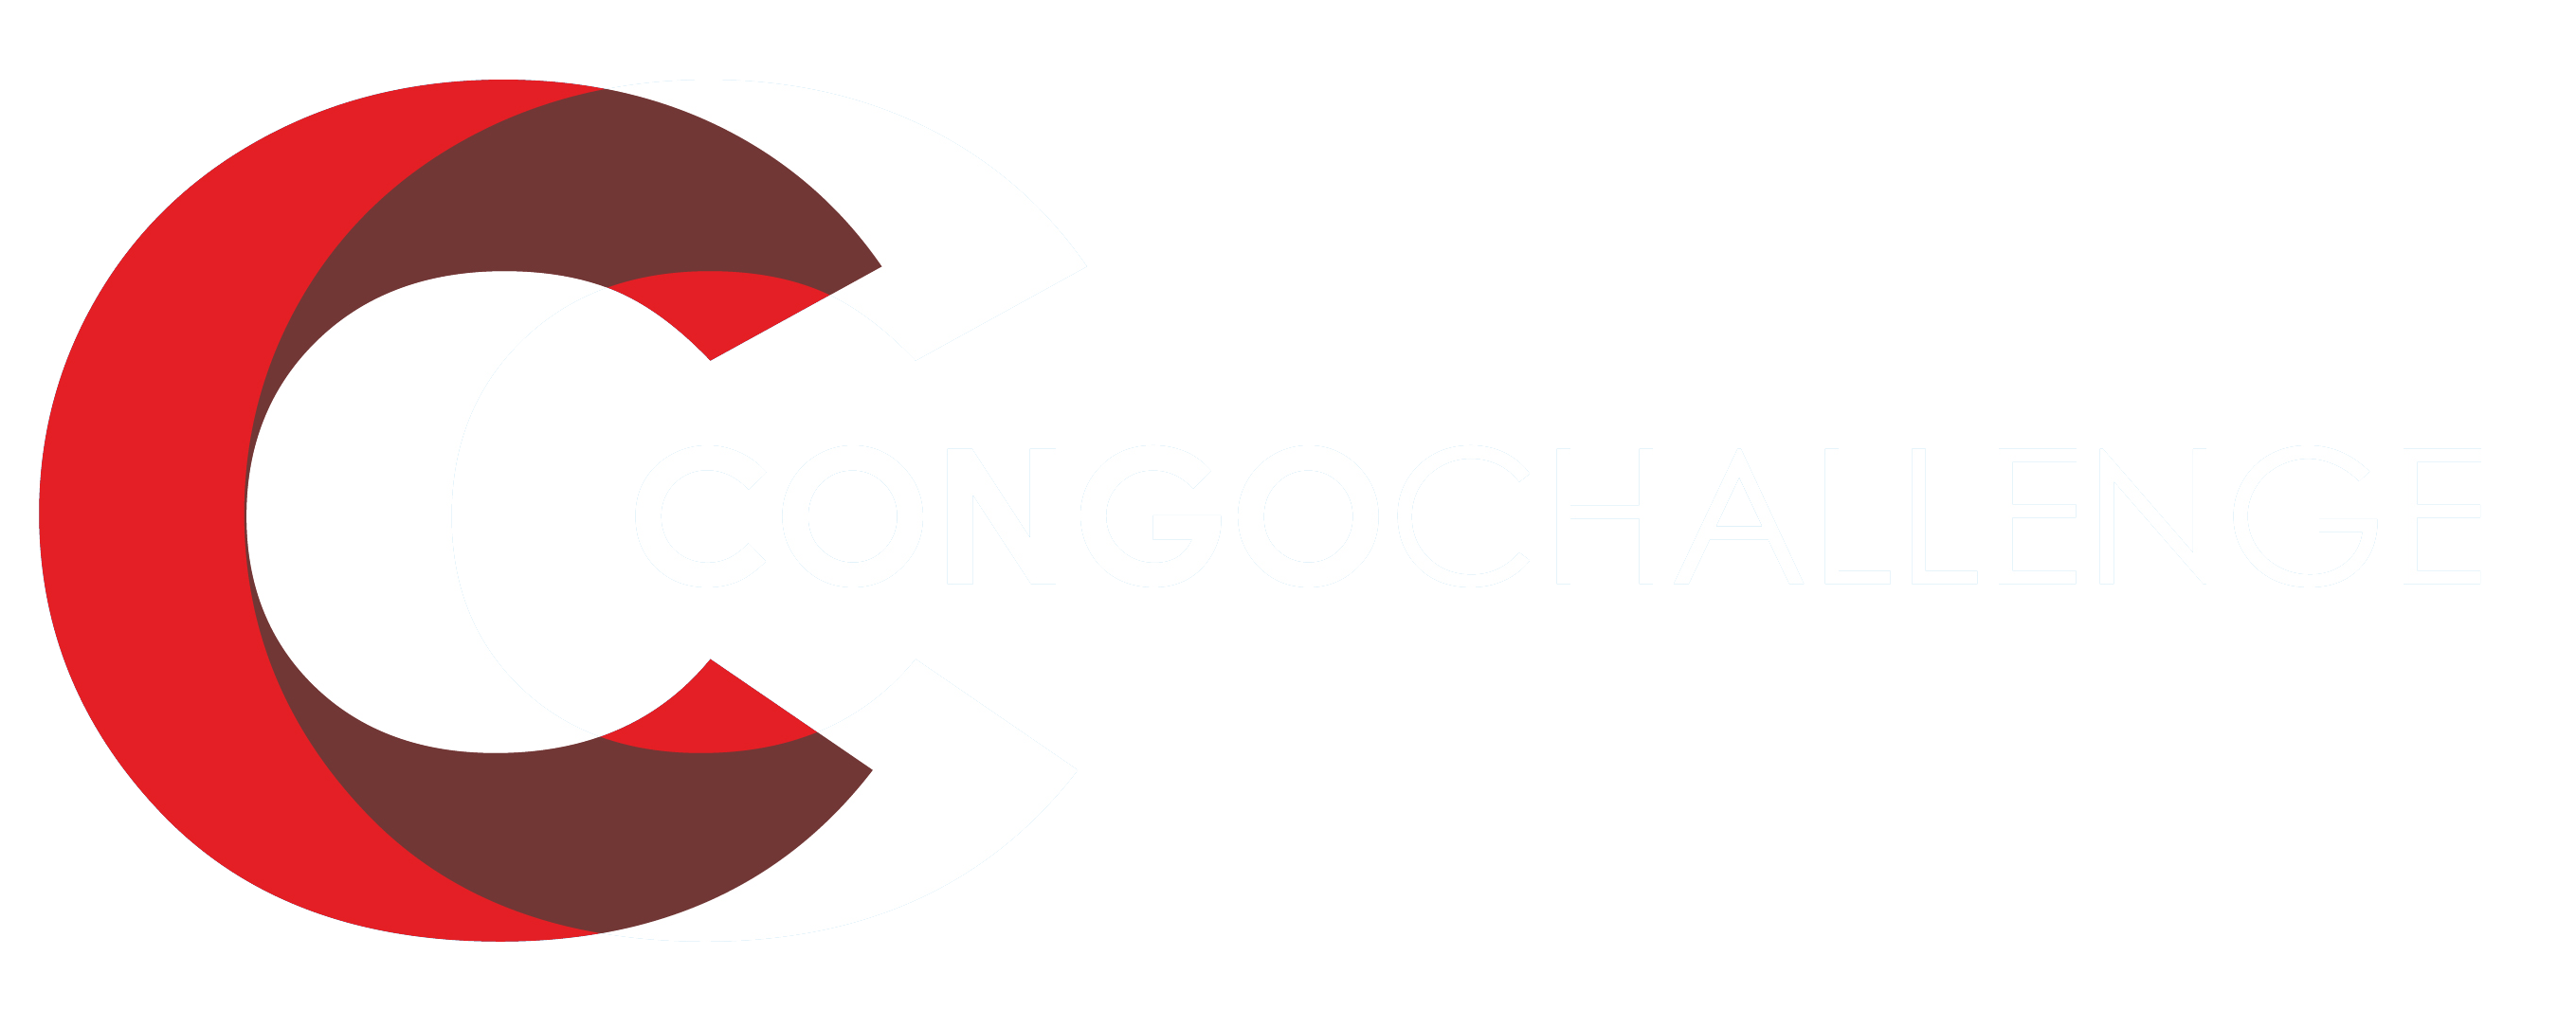 LOGO-CONGO-CHALENGE.png